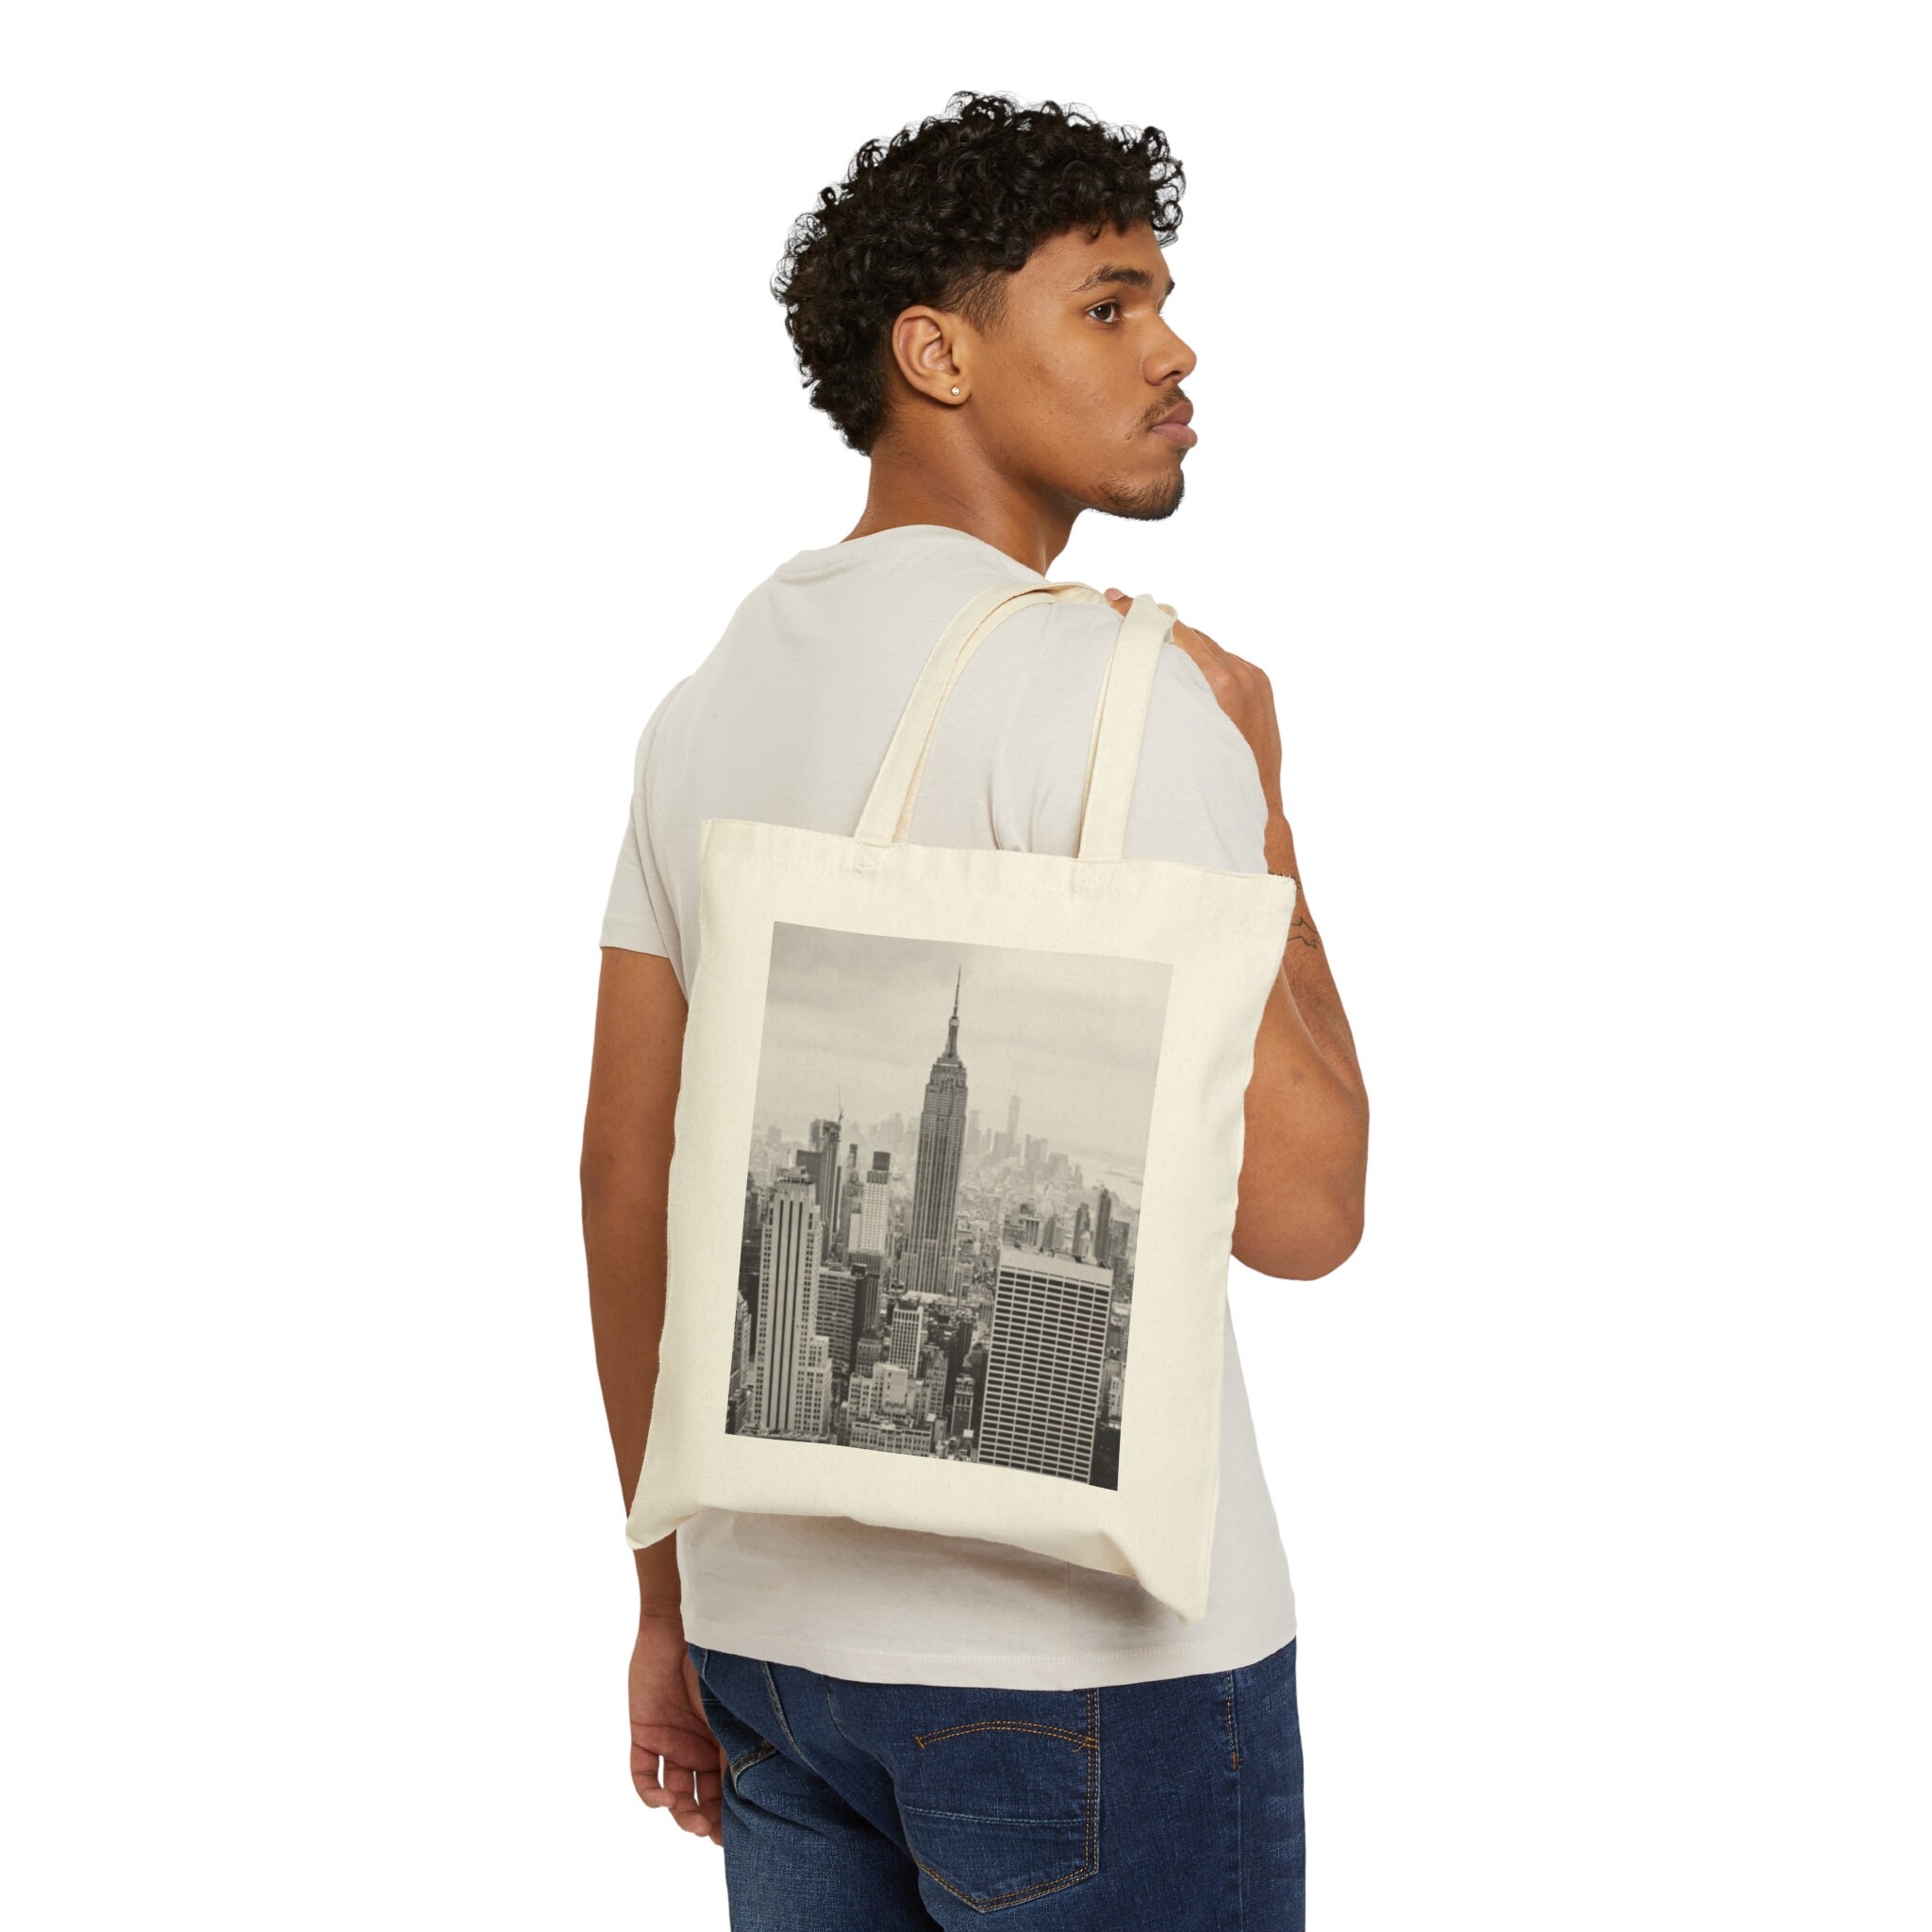 Shop METROCITY Unisex Street Style Messenger & Shoulder Bags by K